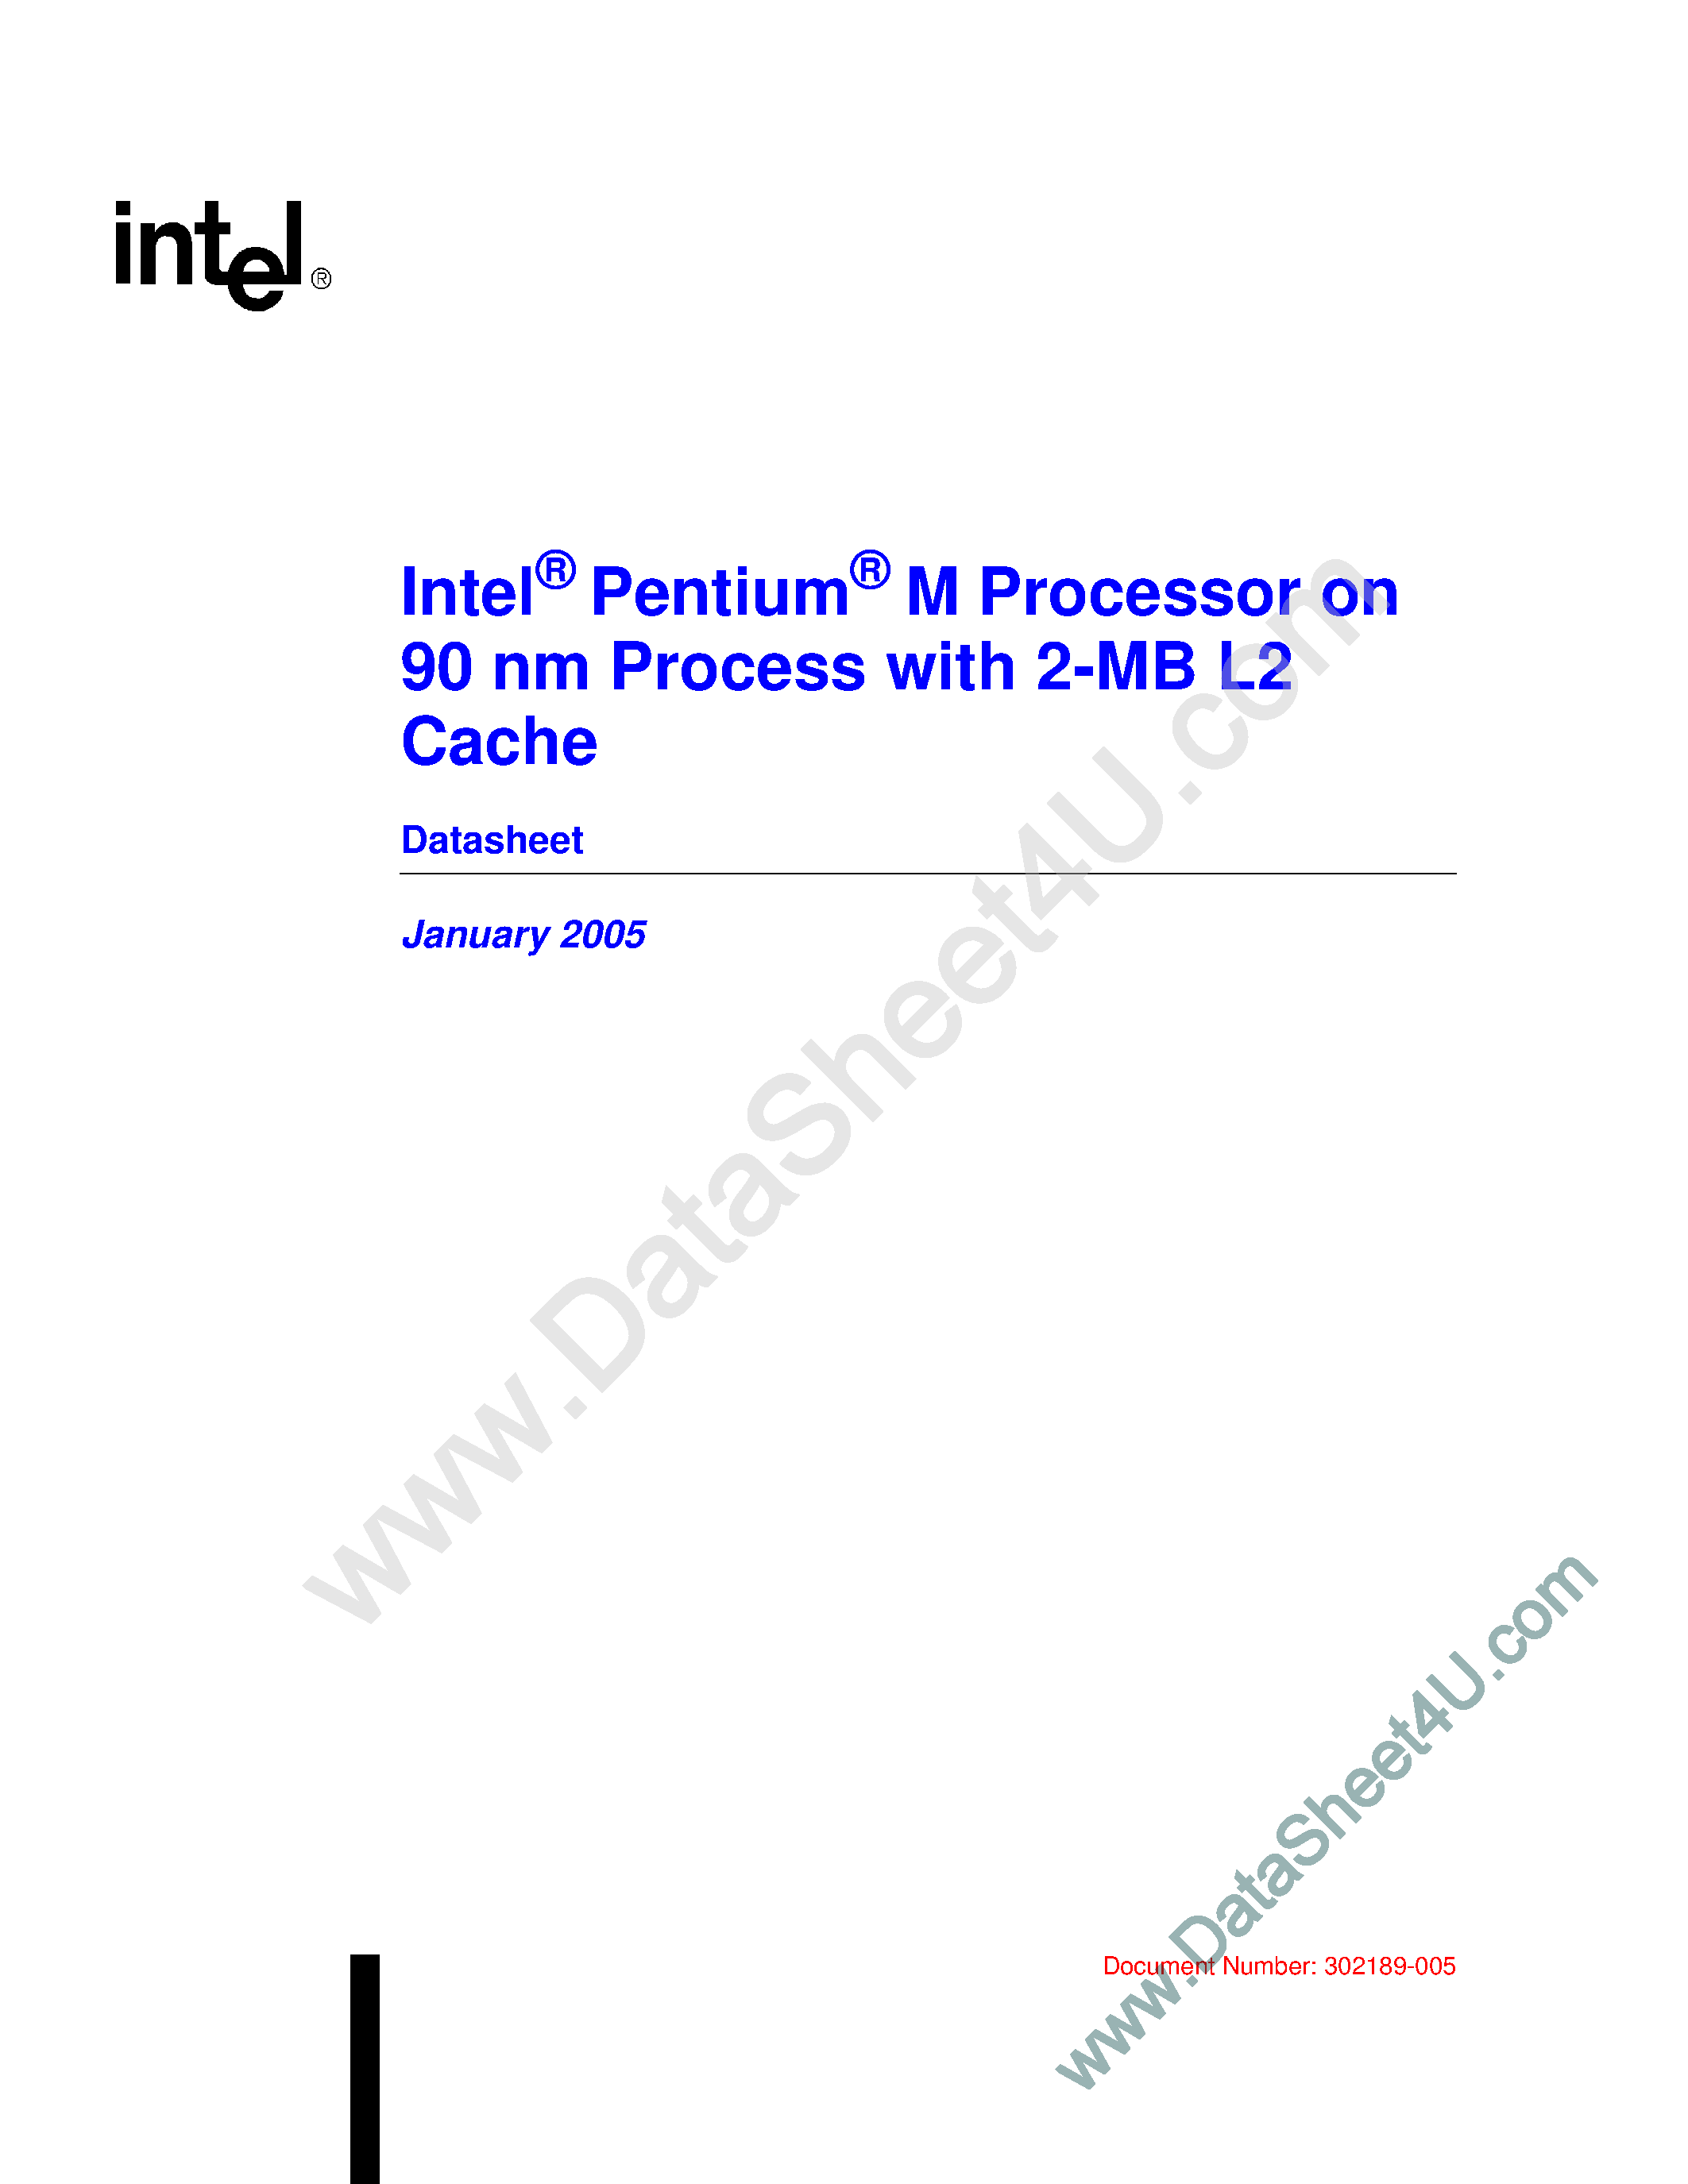 Даташит RJ80536GE0412M - M Processor on 90ns Process страница 1